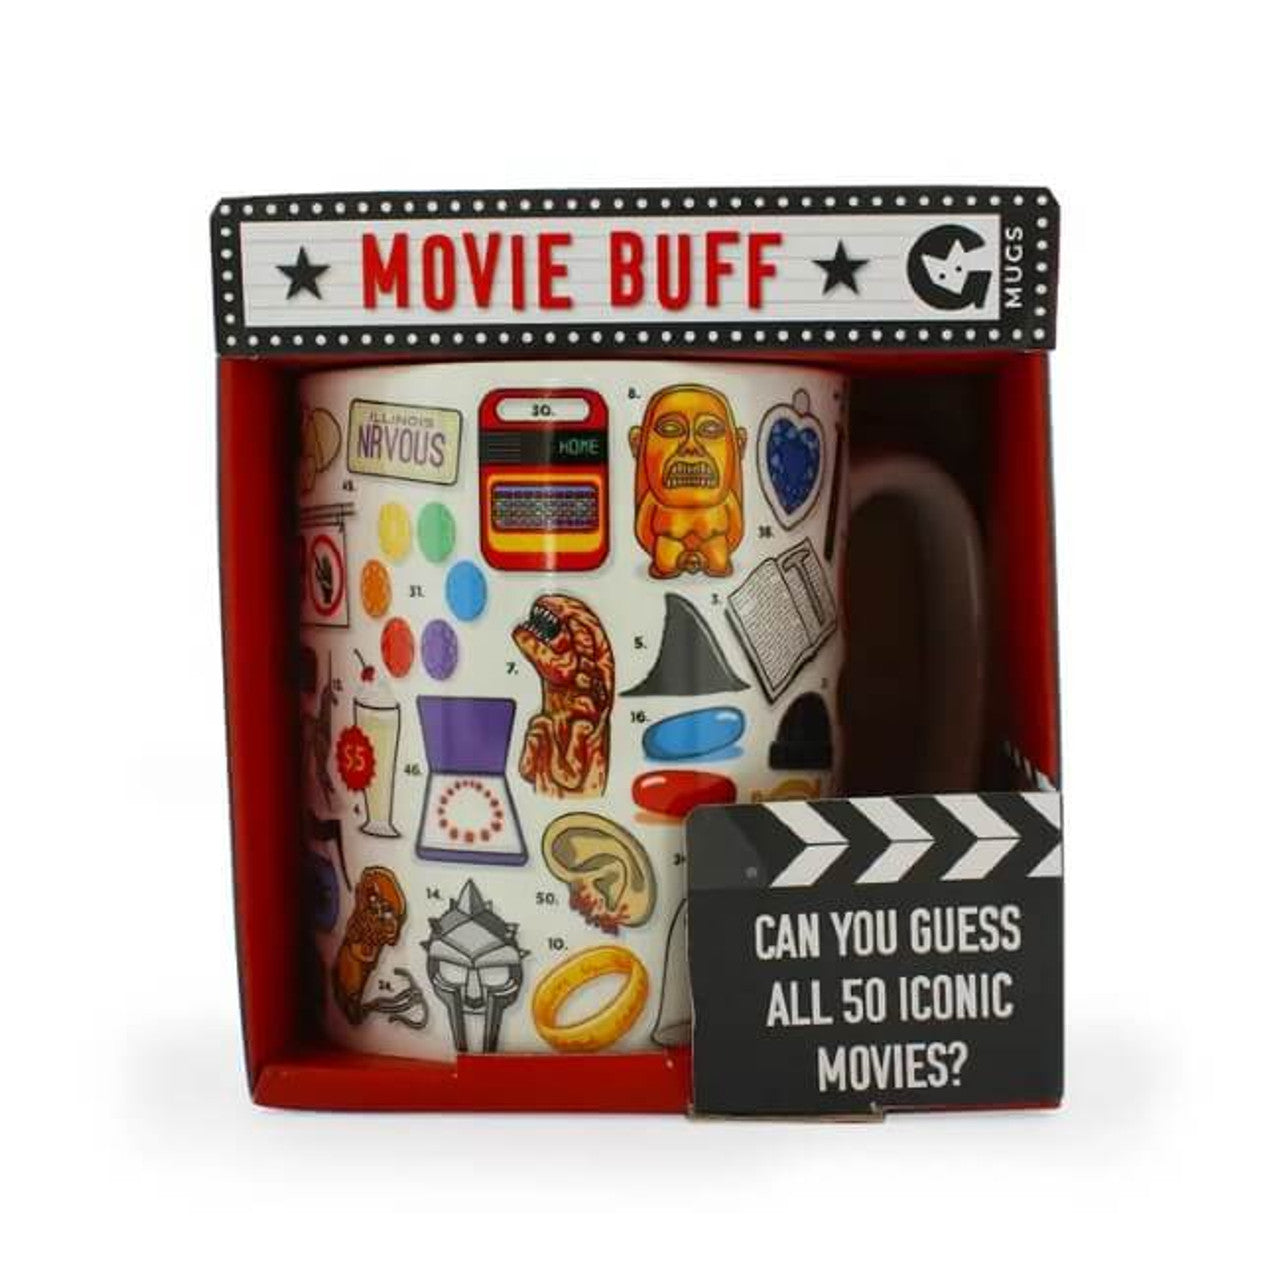 Movie Buff Mug